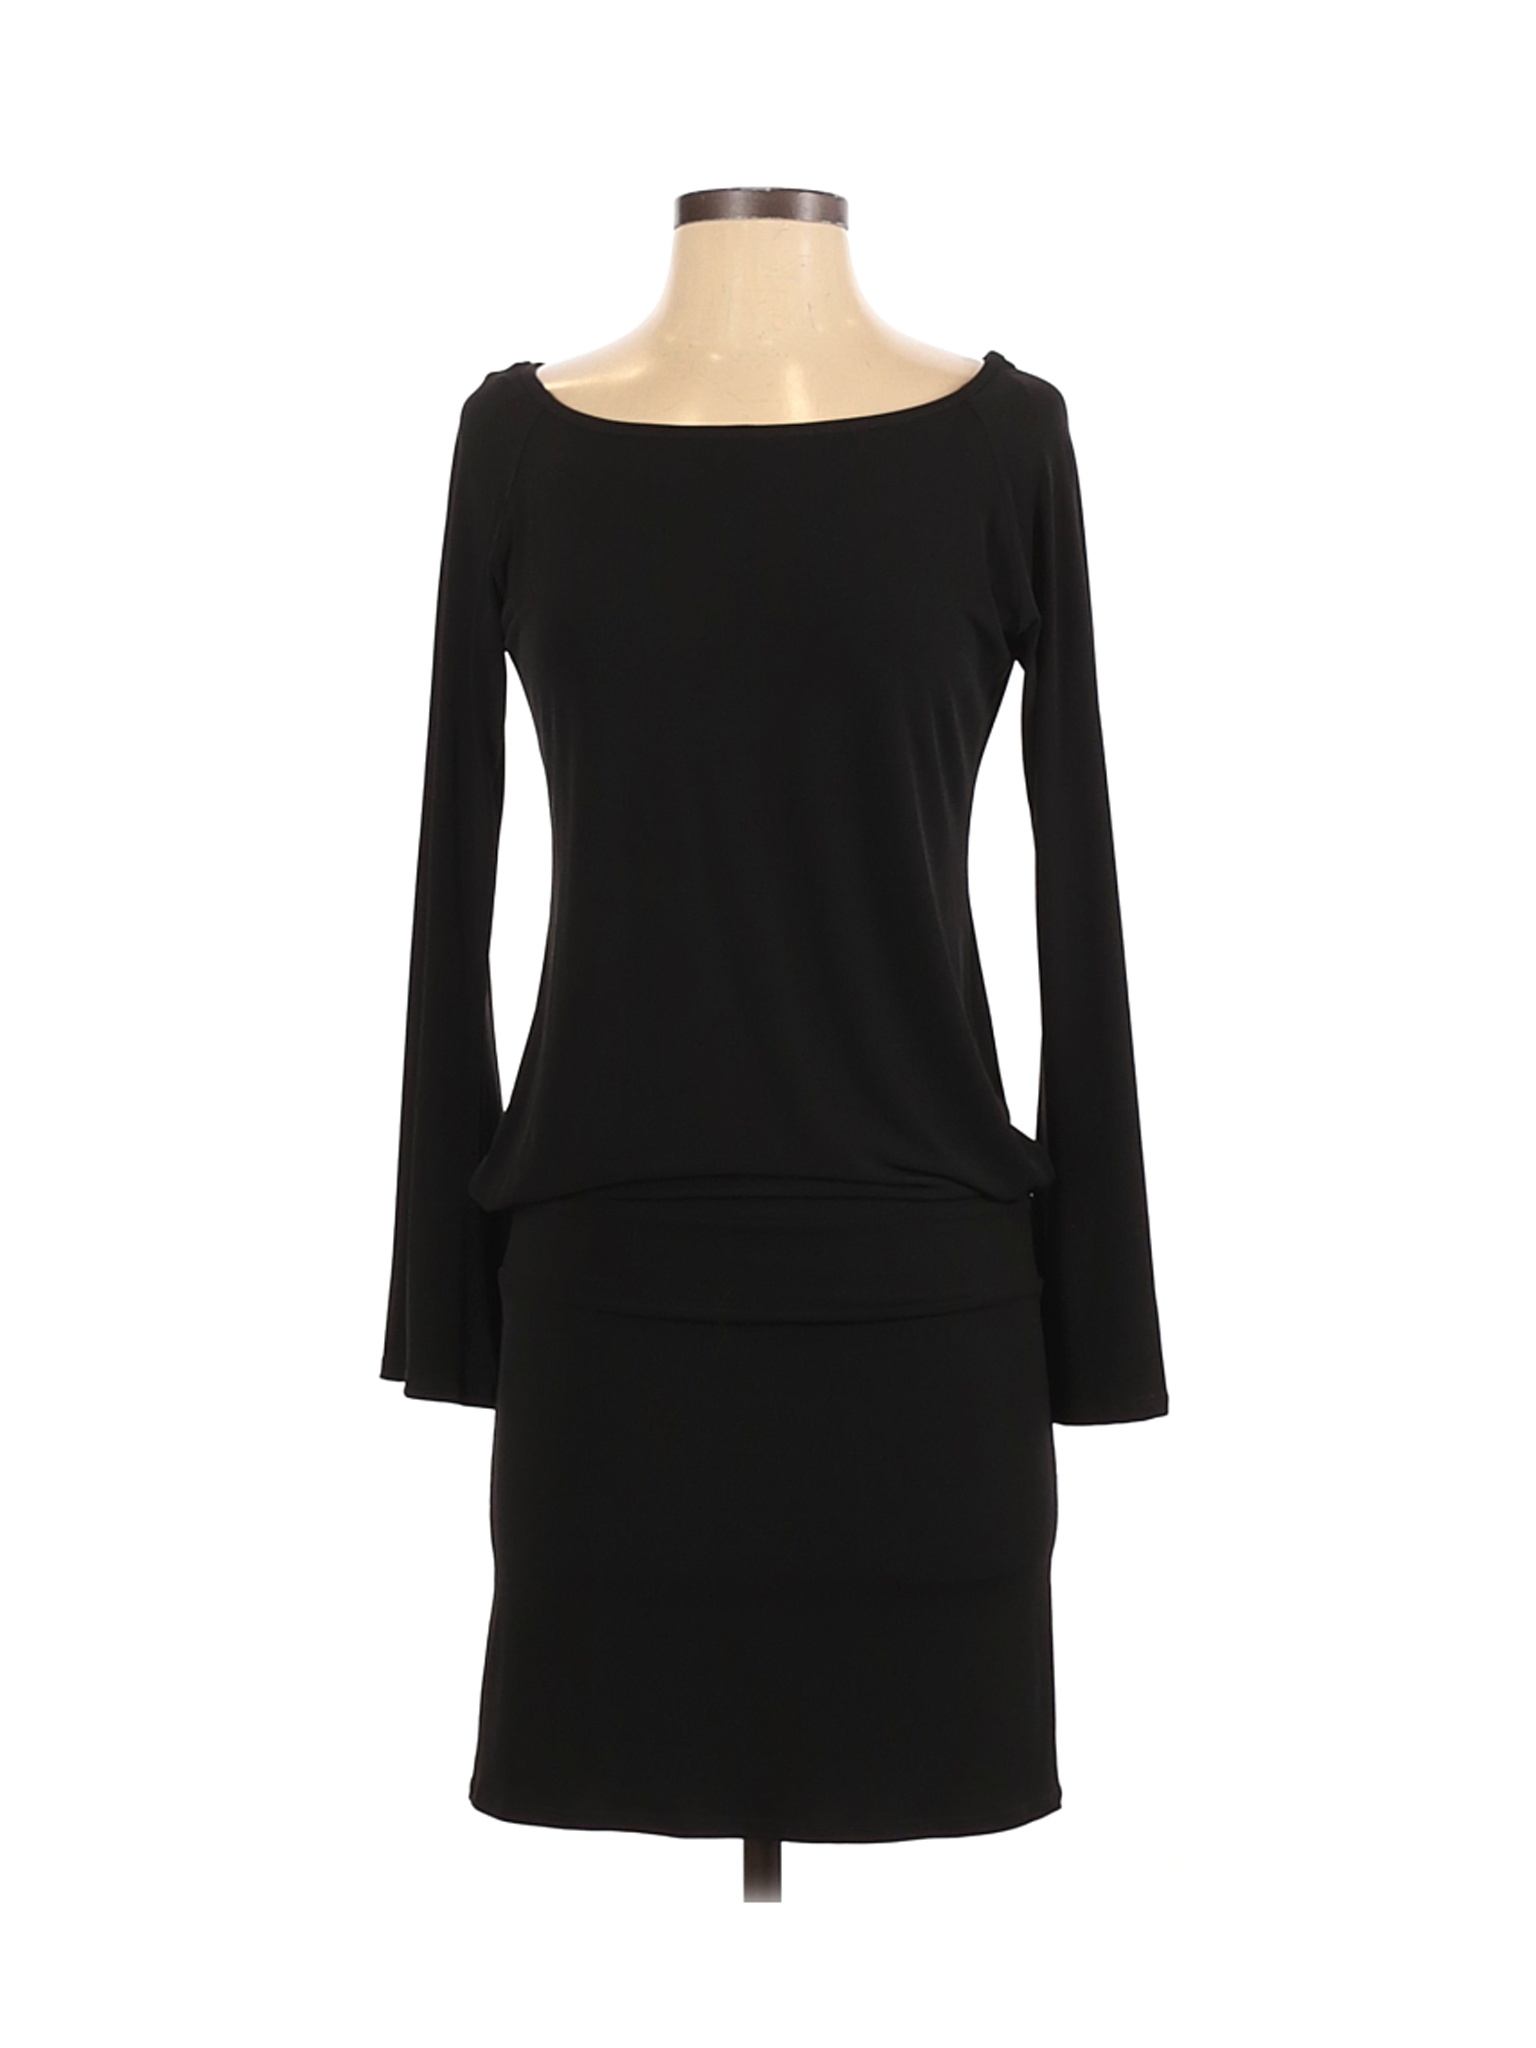 Moda International Women Black Casual Dress S | eBay